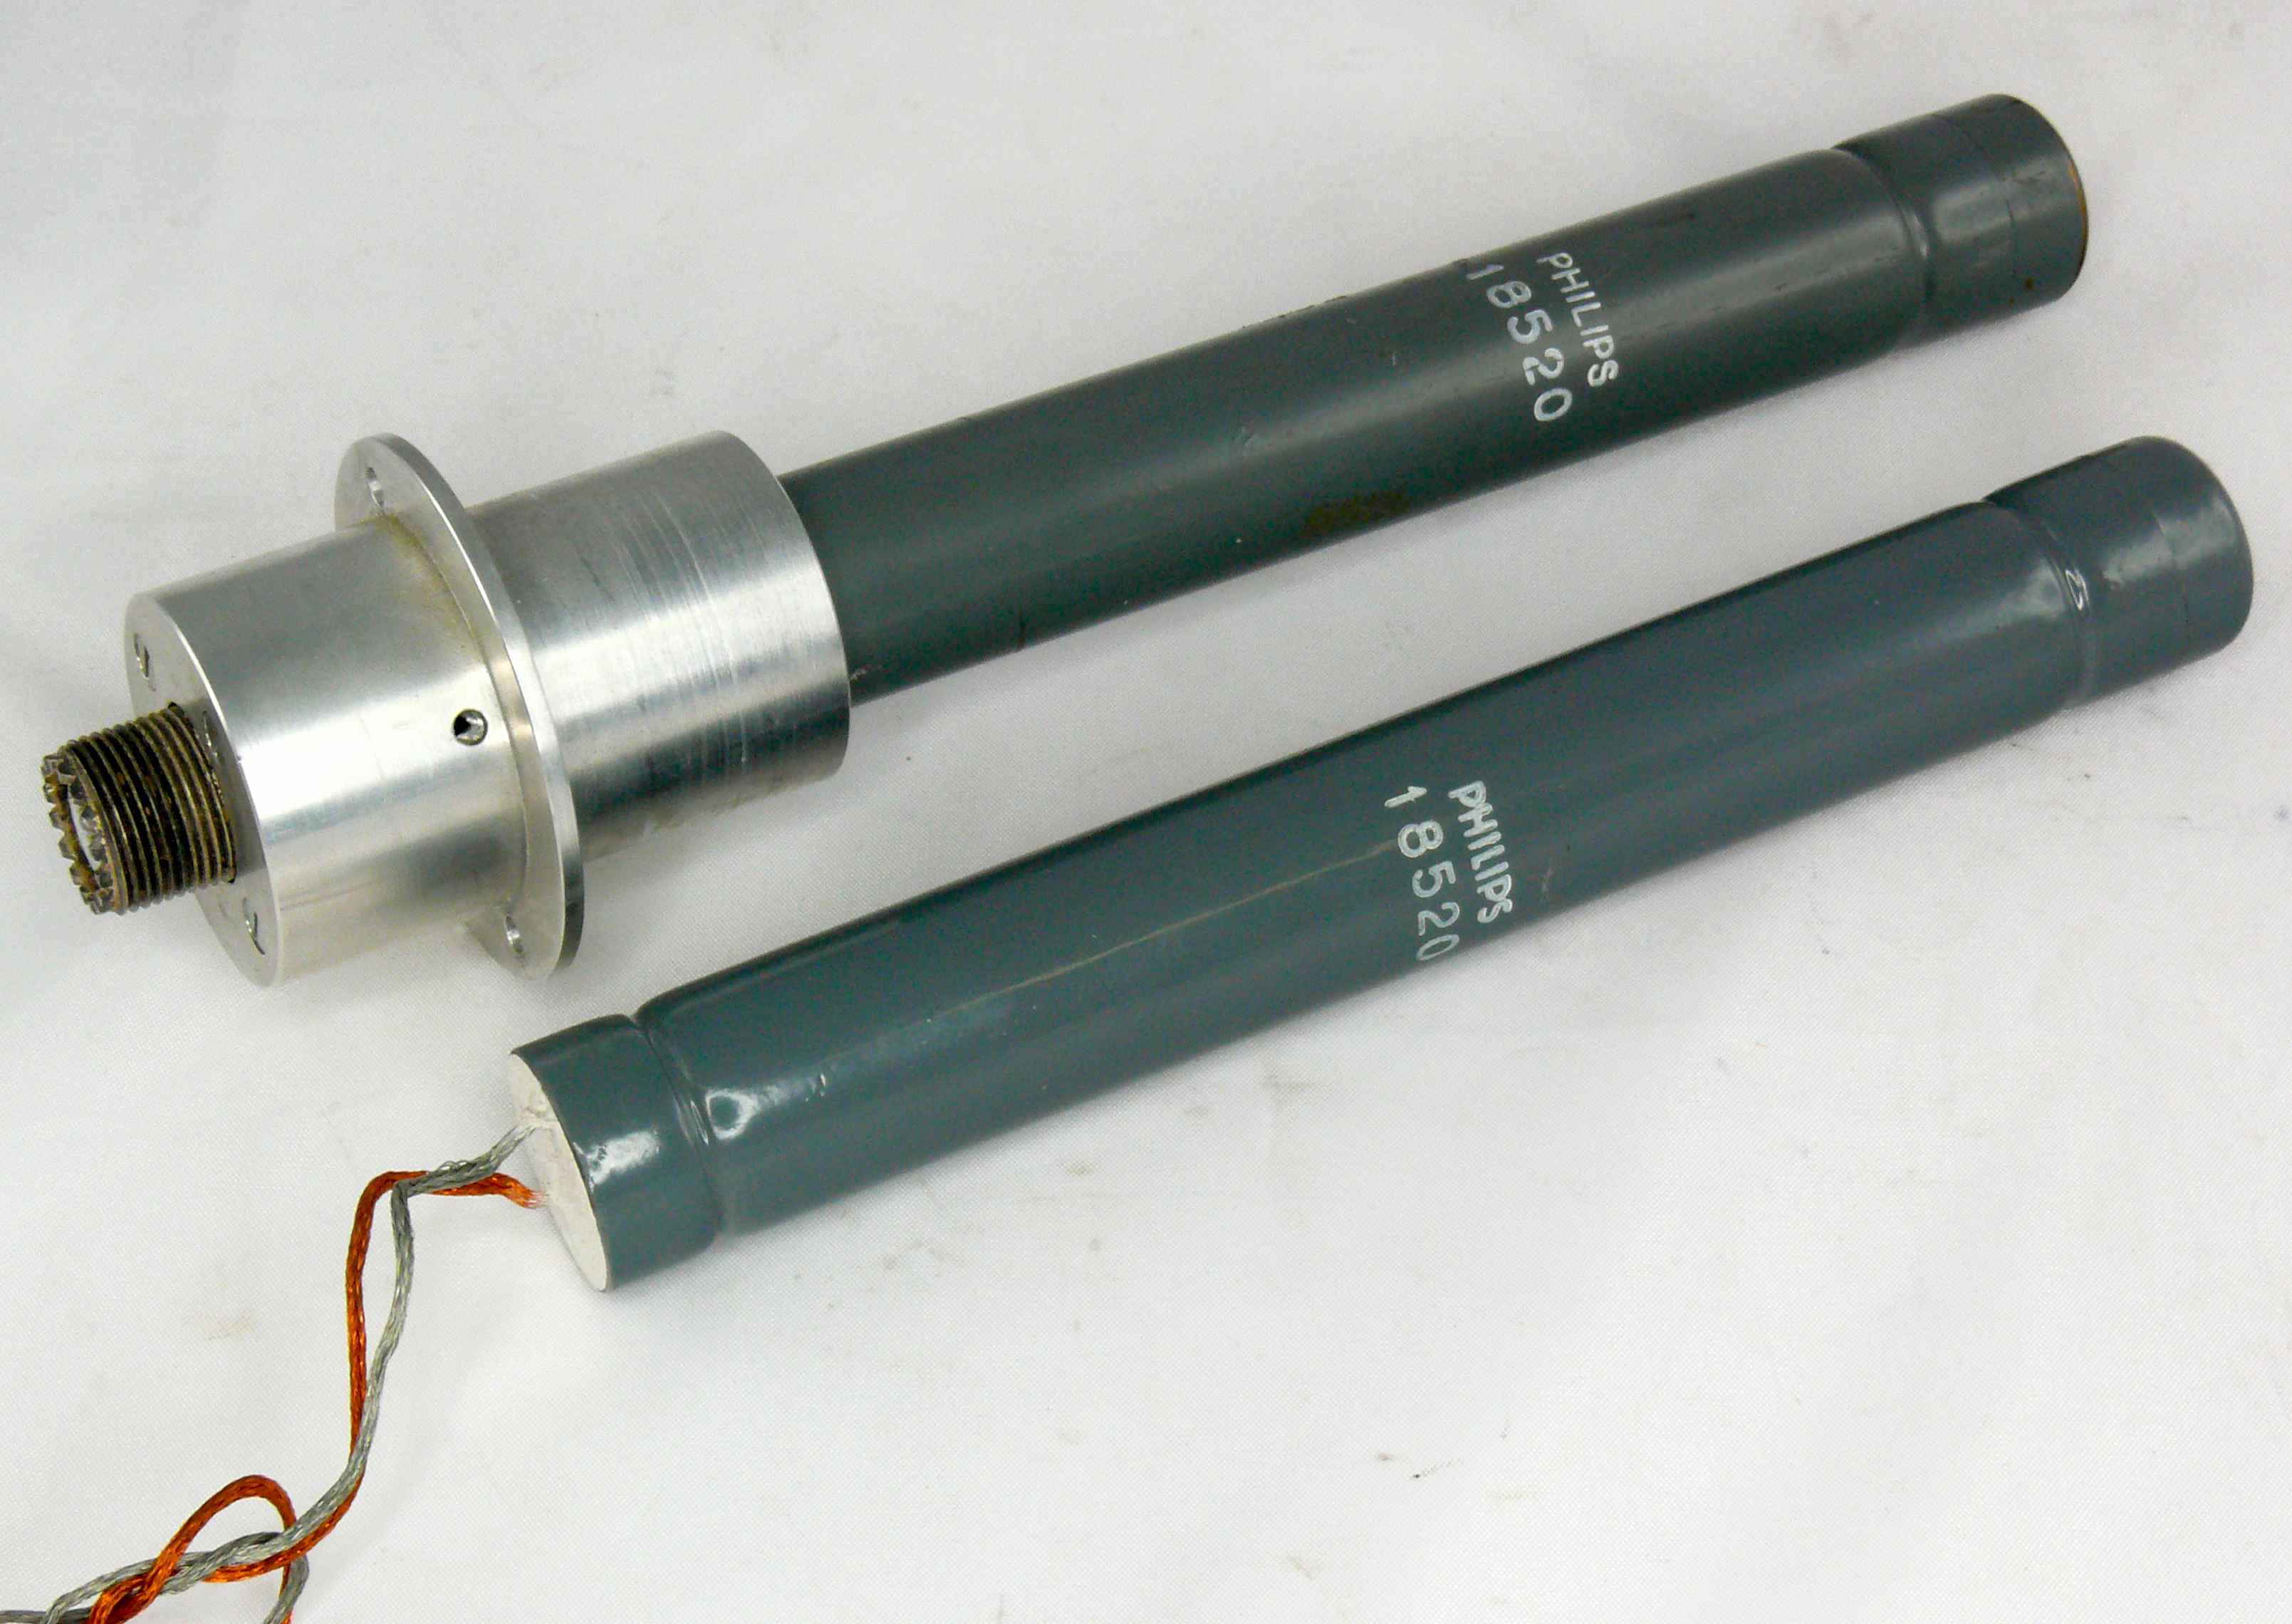 Compteurs Geiger-Müller 18520 (ZP1210)
(tube métallique, pour rayons gamma)